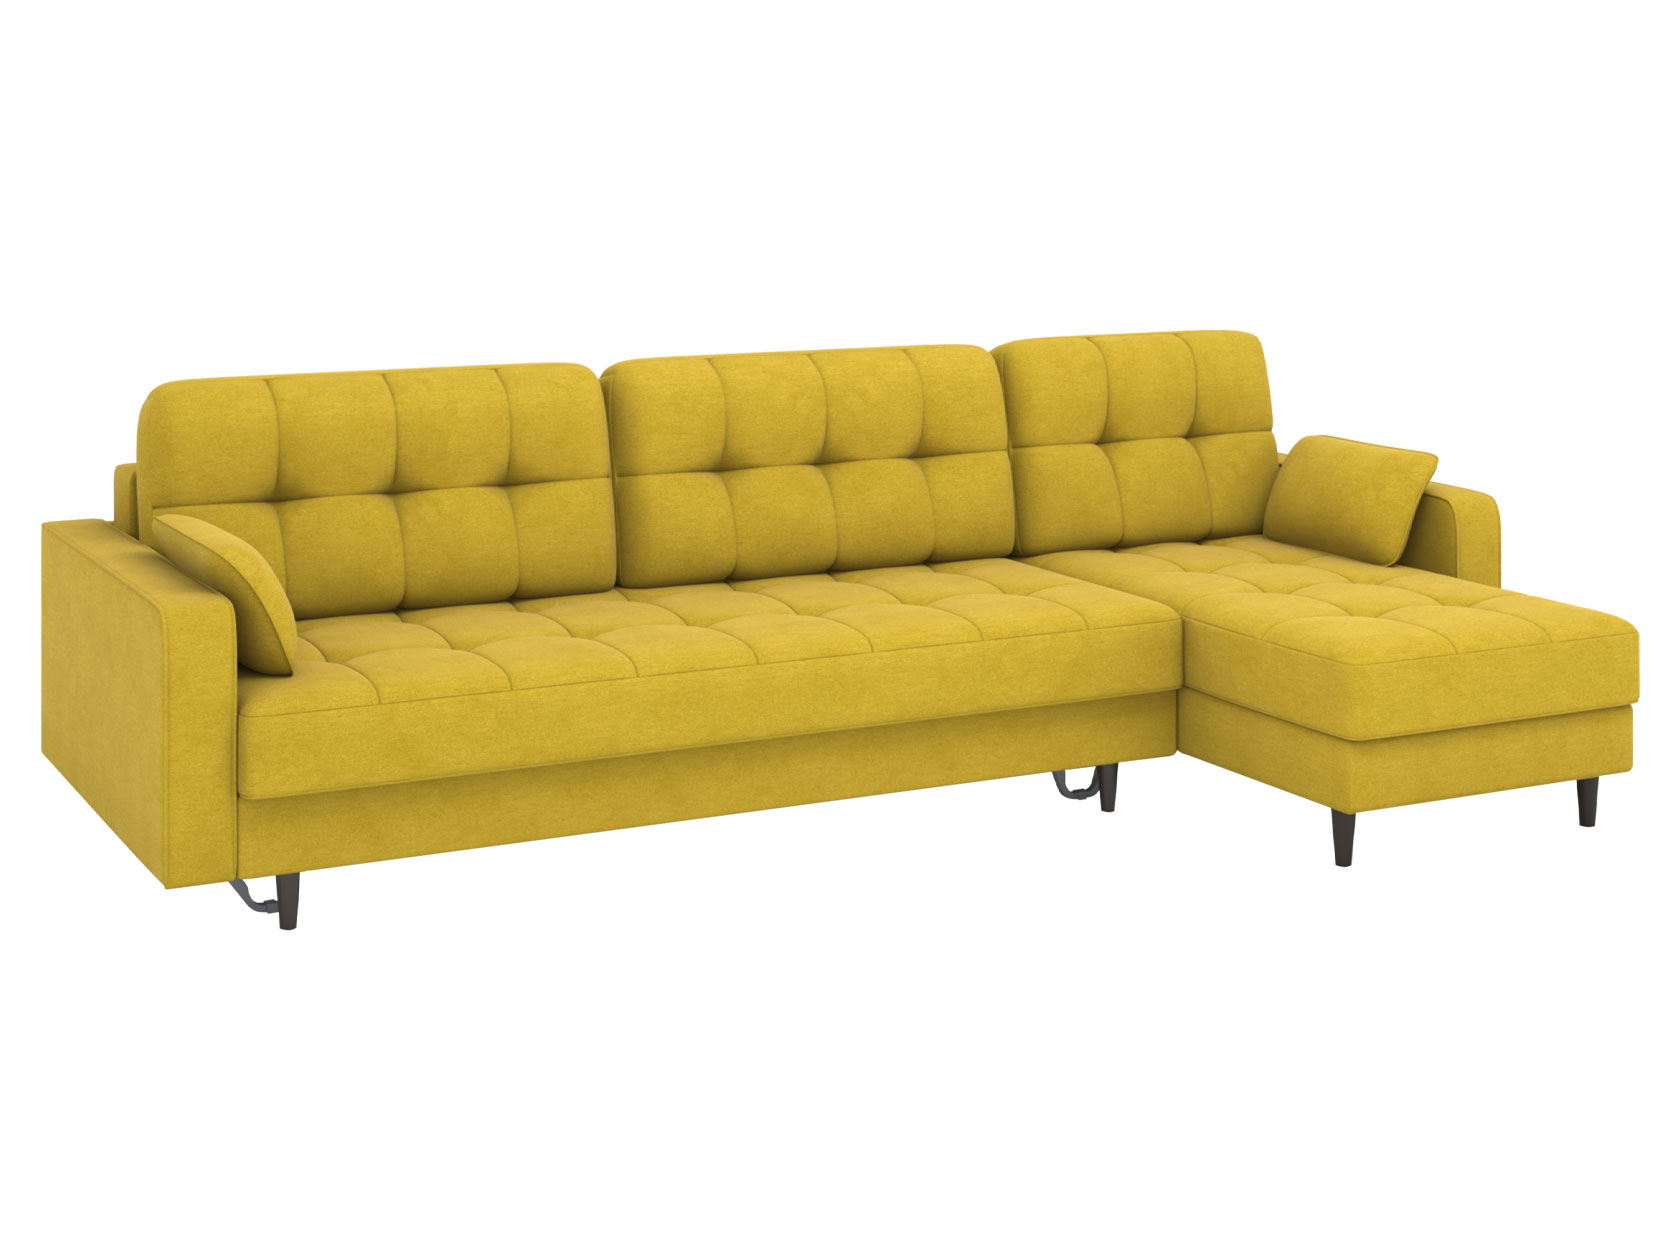 Угловой диван с оттоманкой Диван Санфорд с оттоманкой макси Санфорд Макси фото 31